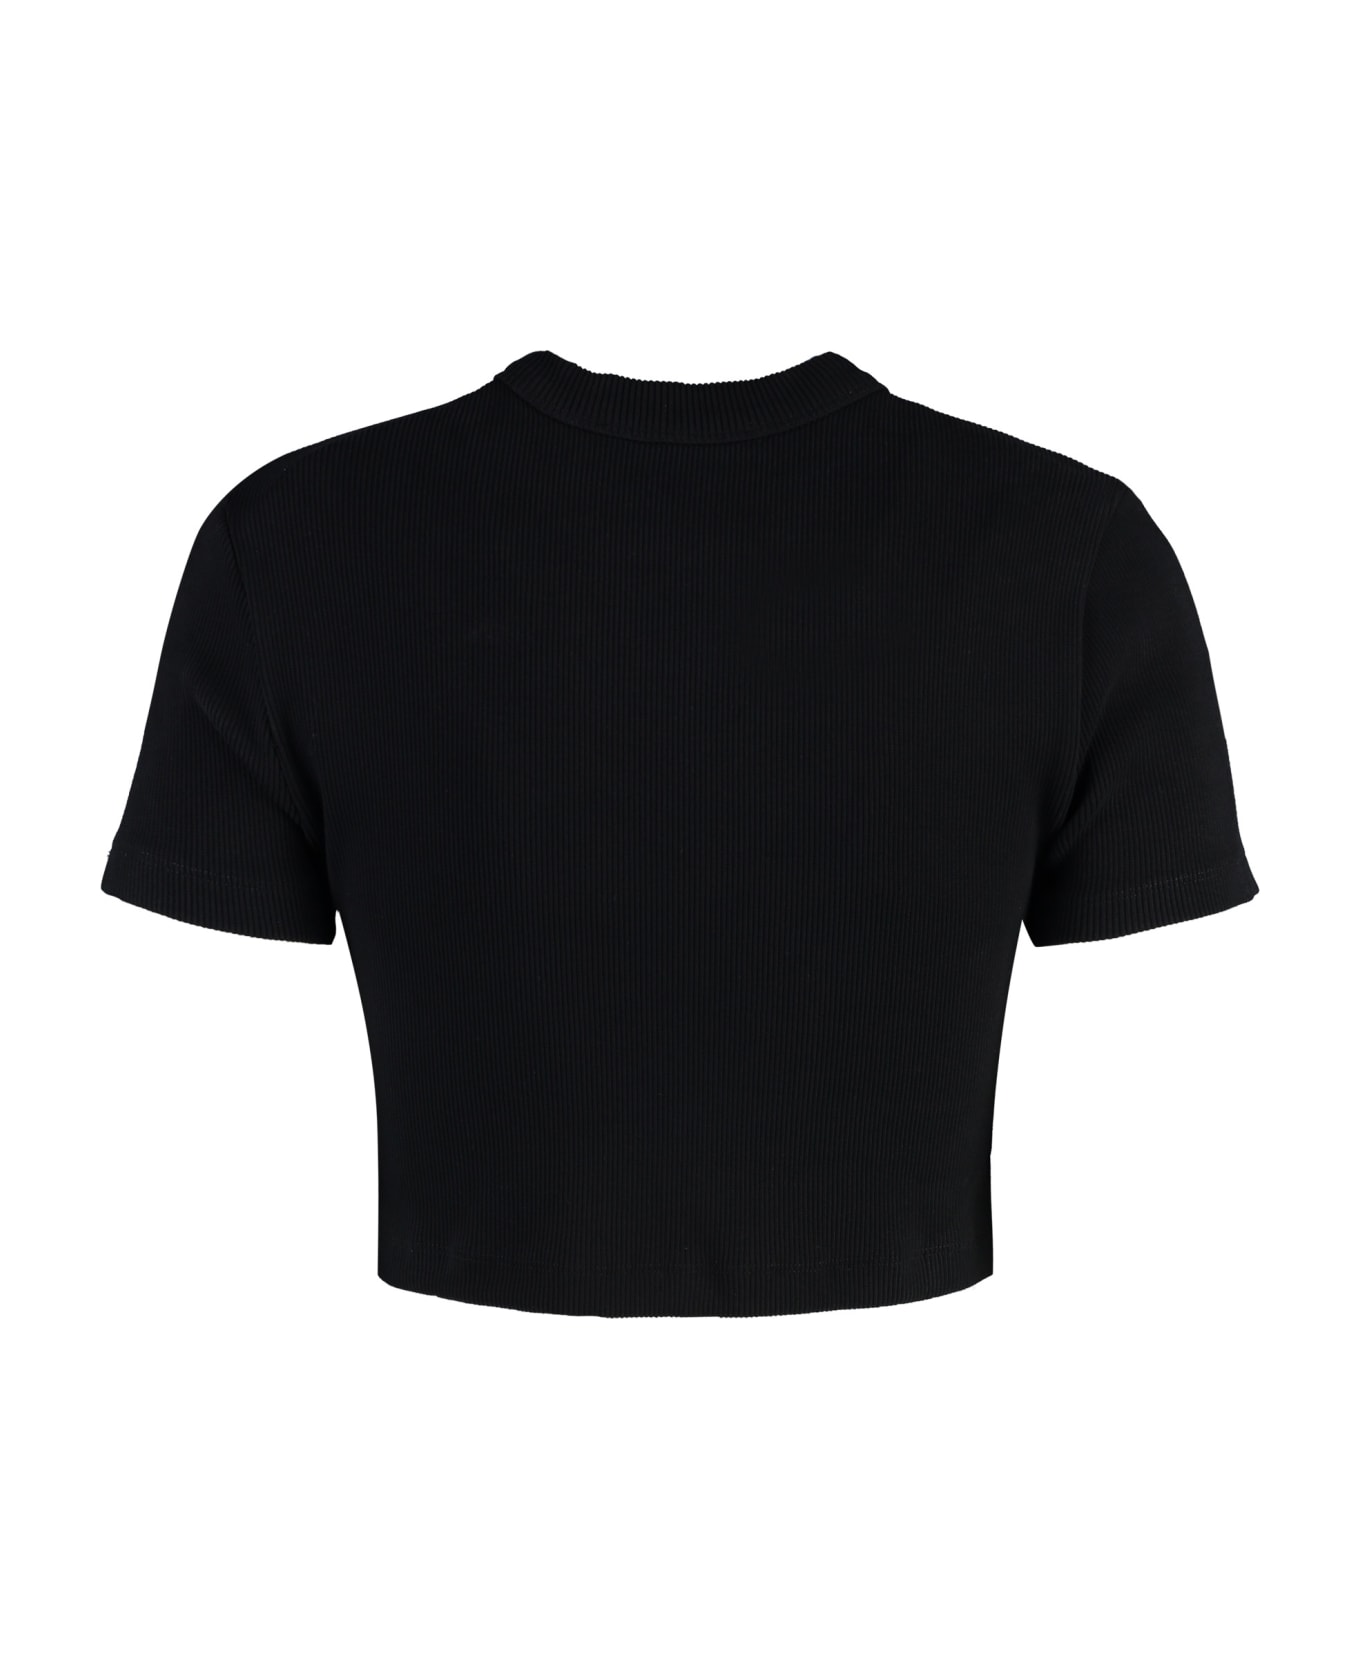 Alexander Wang Cotton Top - black Tシャツ